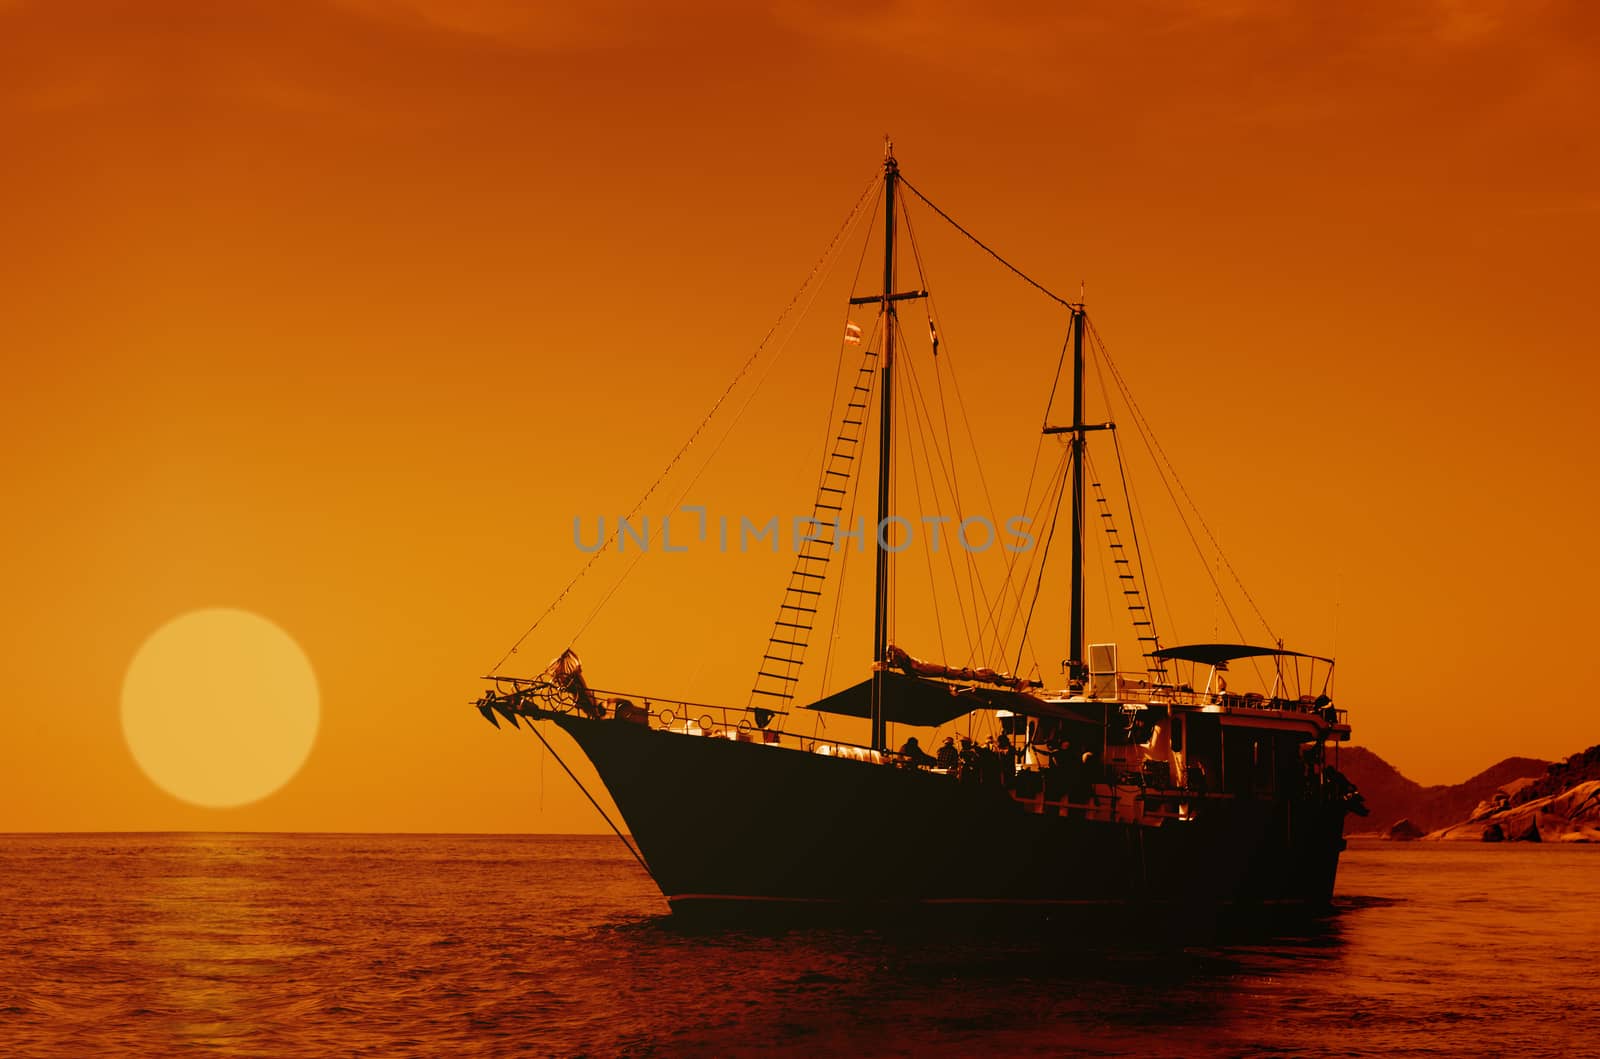 Sailing ship on the sea at sunset skyline.  by iryna_rasko